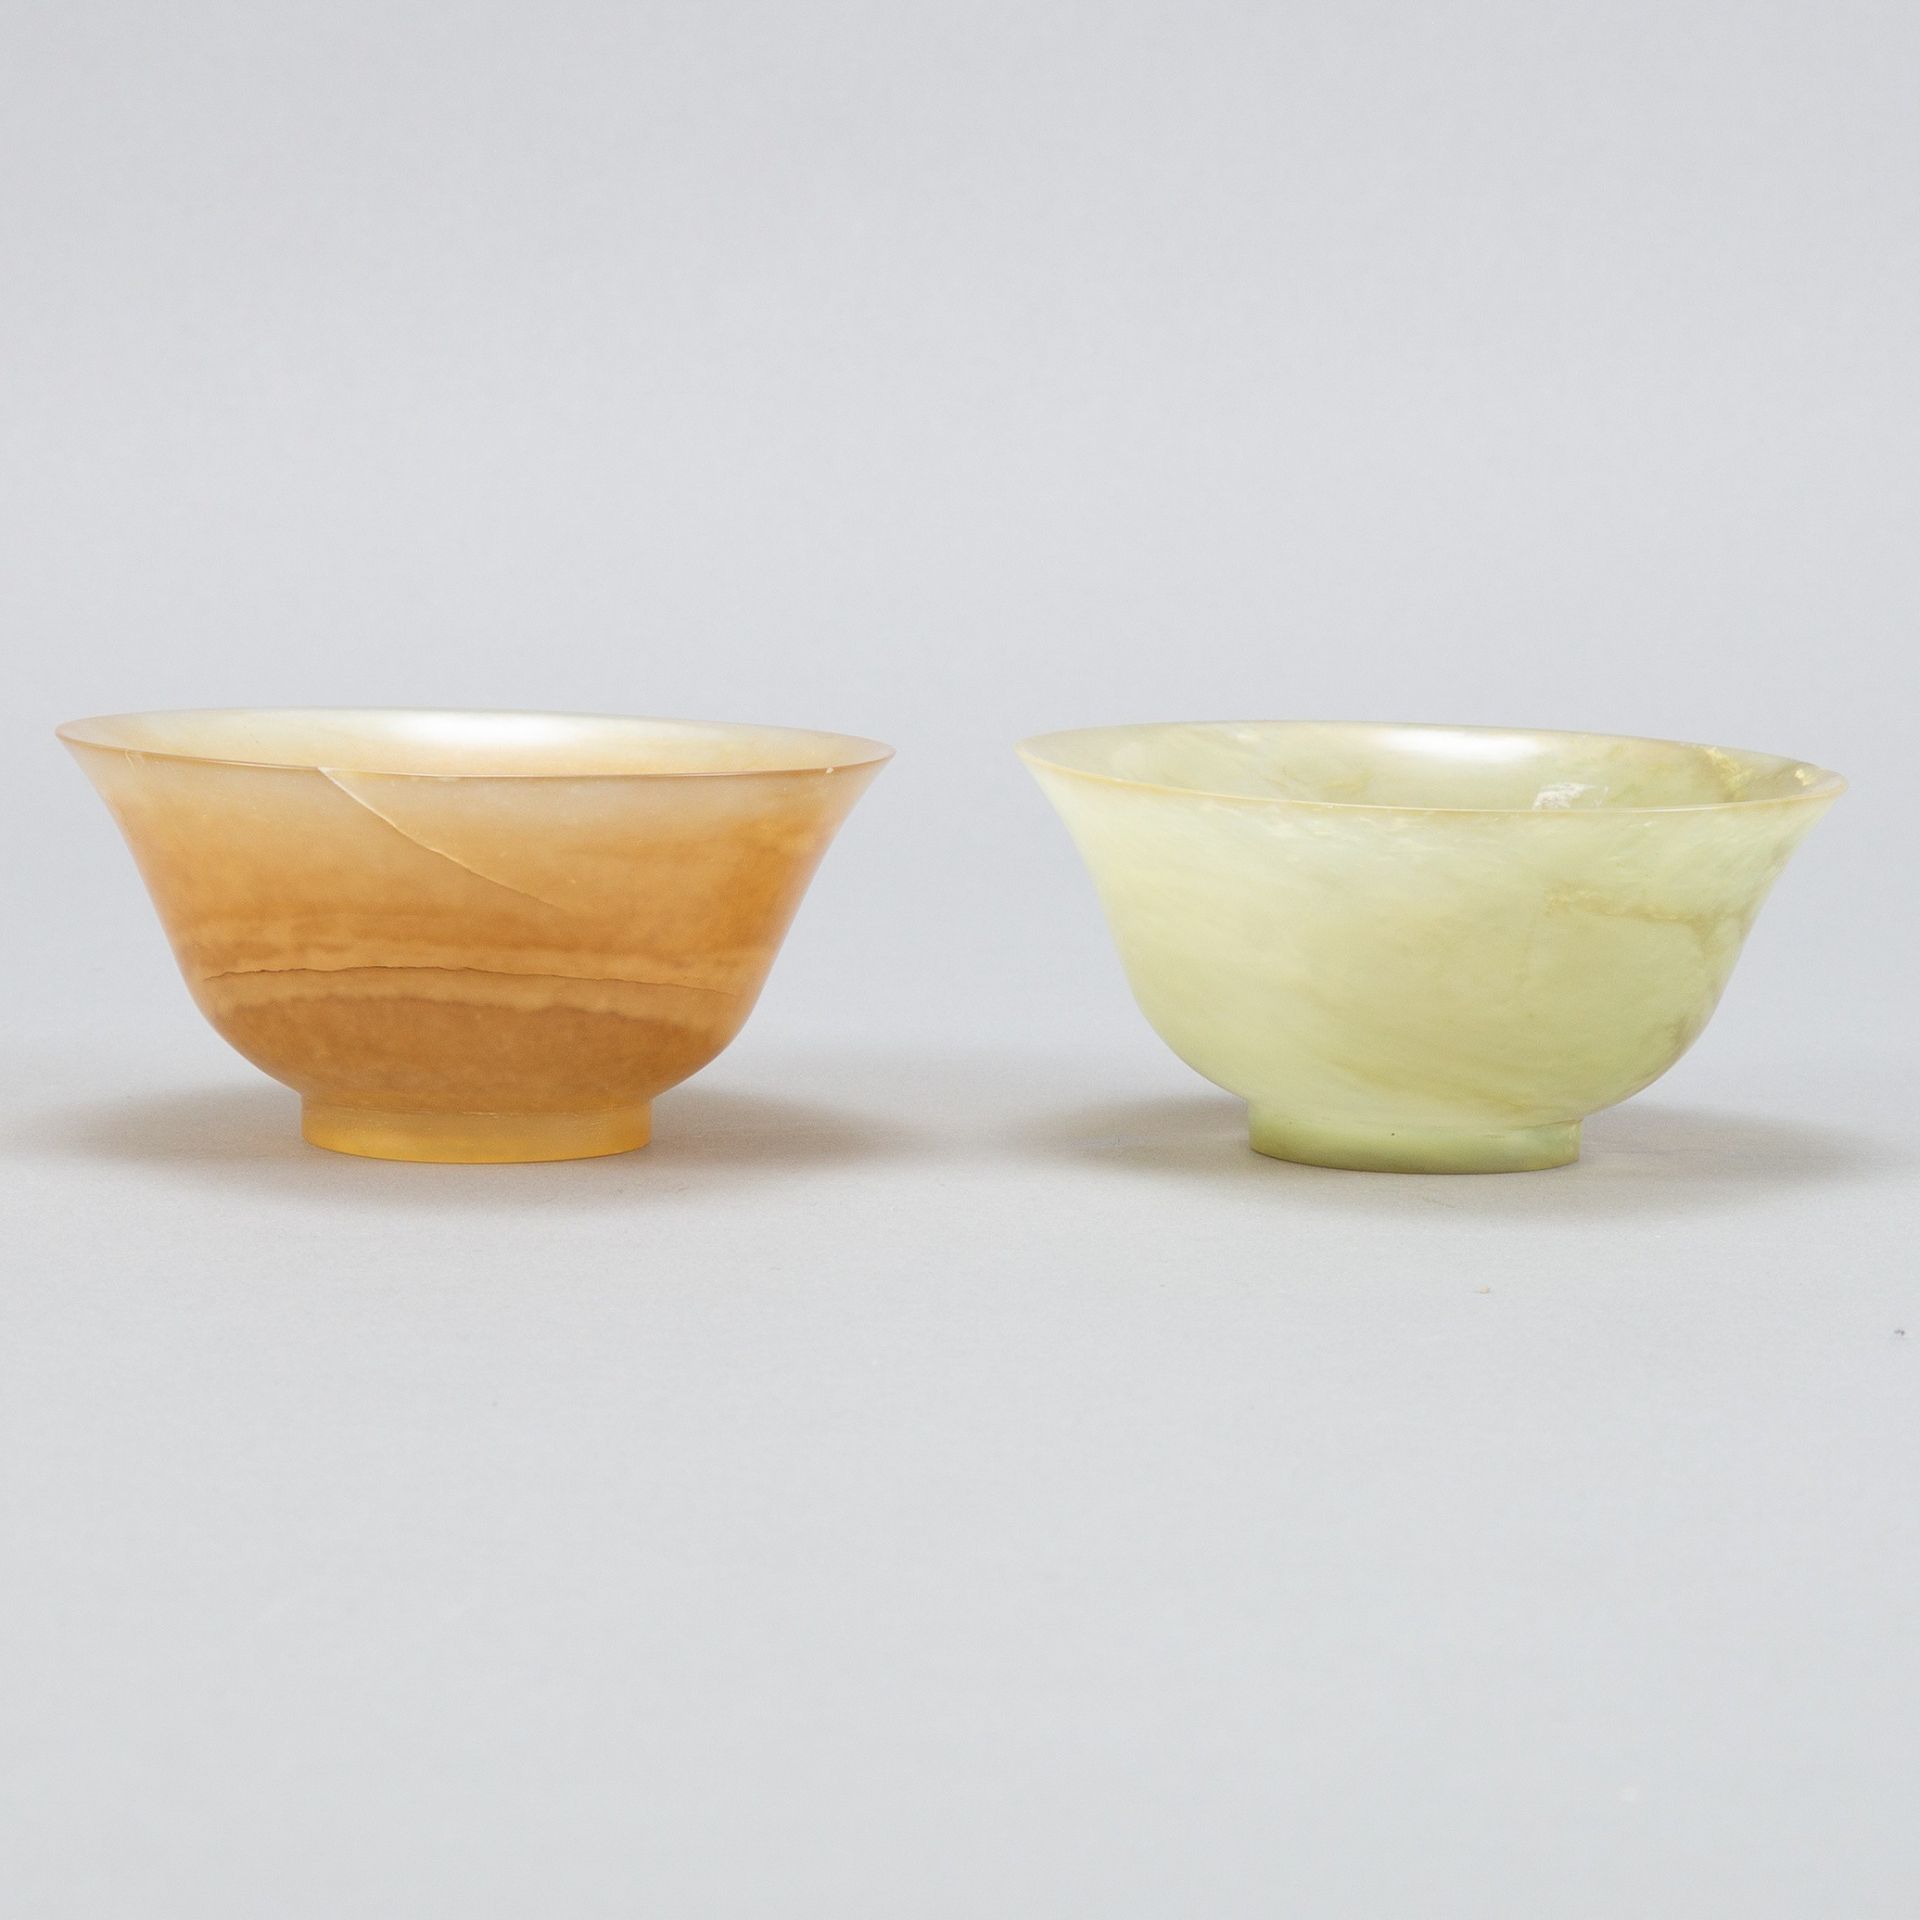 Pair of 20th c. Chinese Jade Bowls - Image 3 of 3